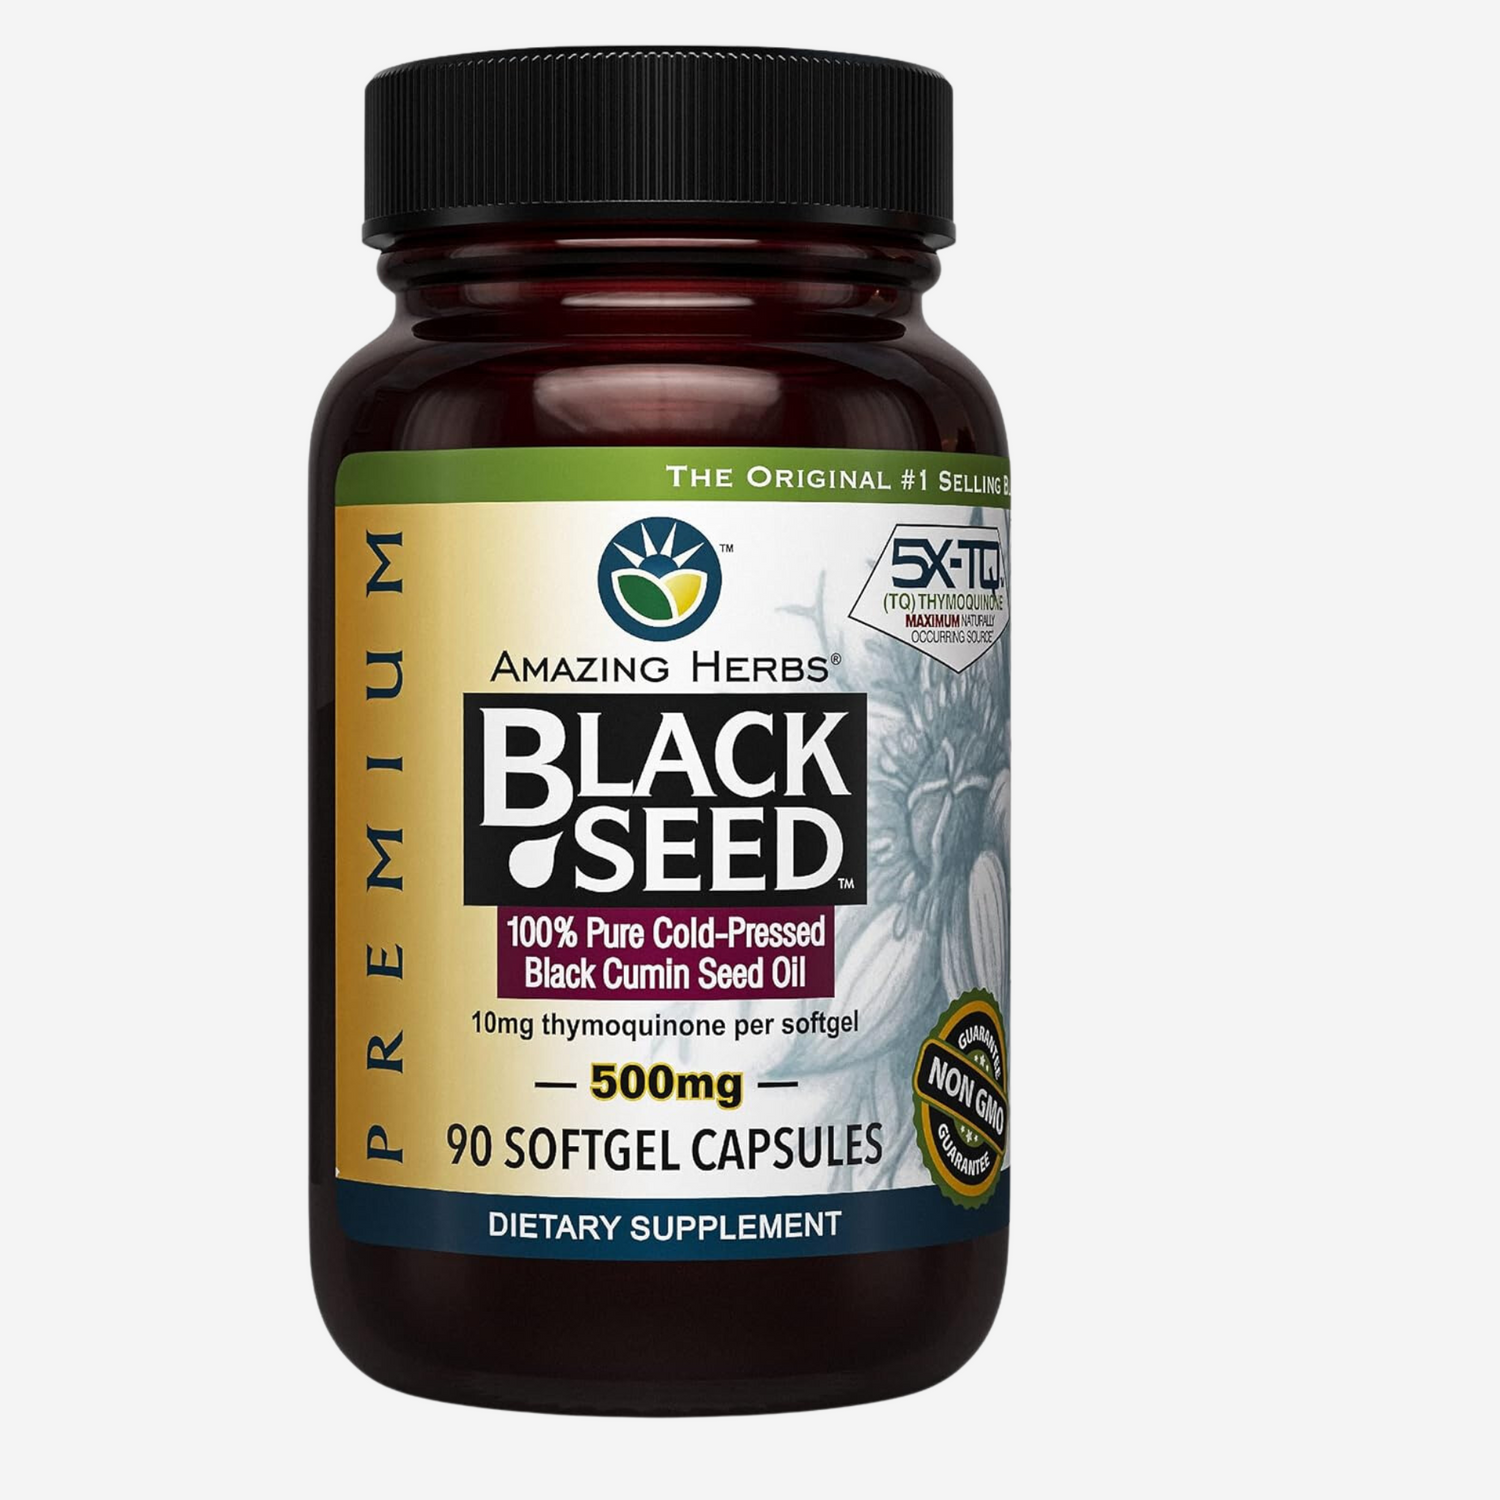 Amazing Herbs Premium Black Seed Oil Capsules - Cold Pressed Nigella Sativa Aids in Digestive Health, Immune Support